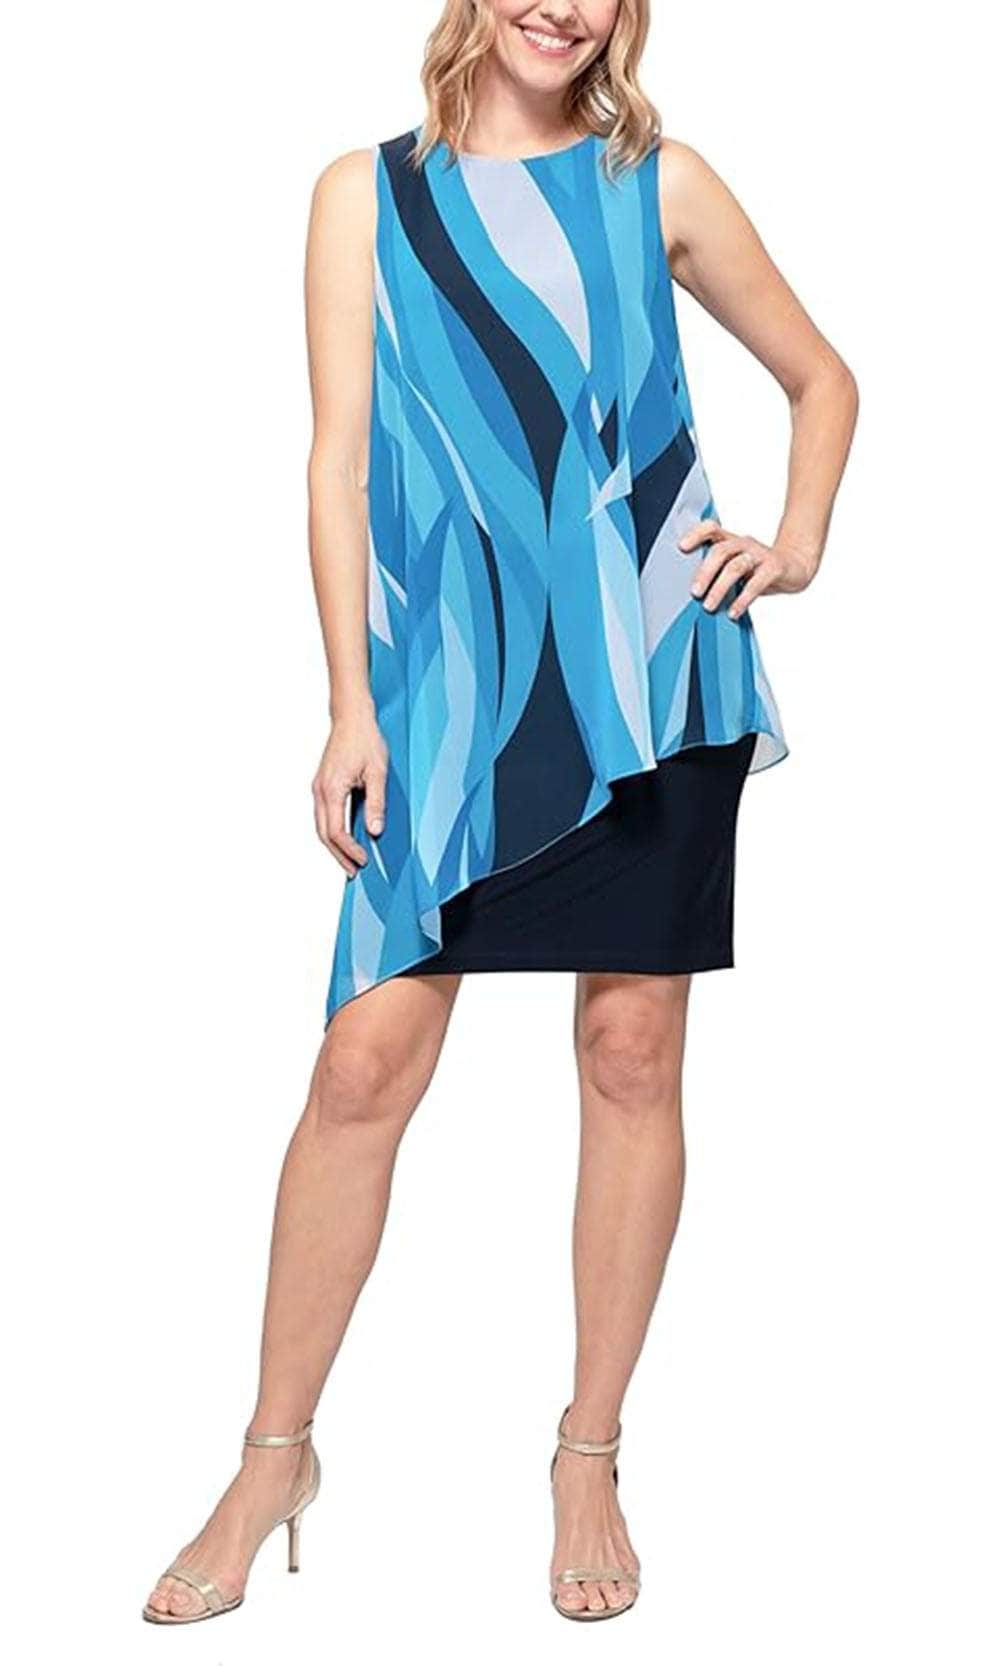 SLNY 9177519 - Printed Chiffon Overlay Dress
